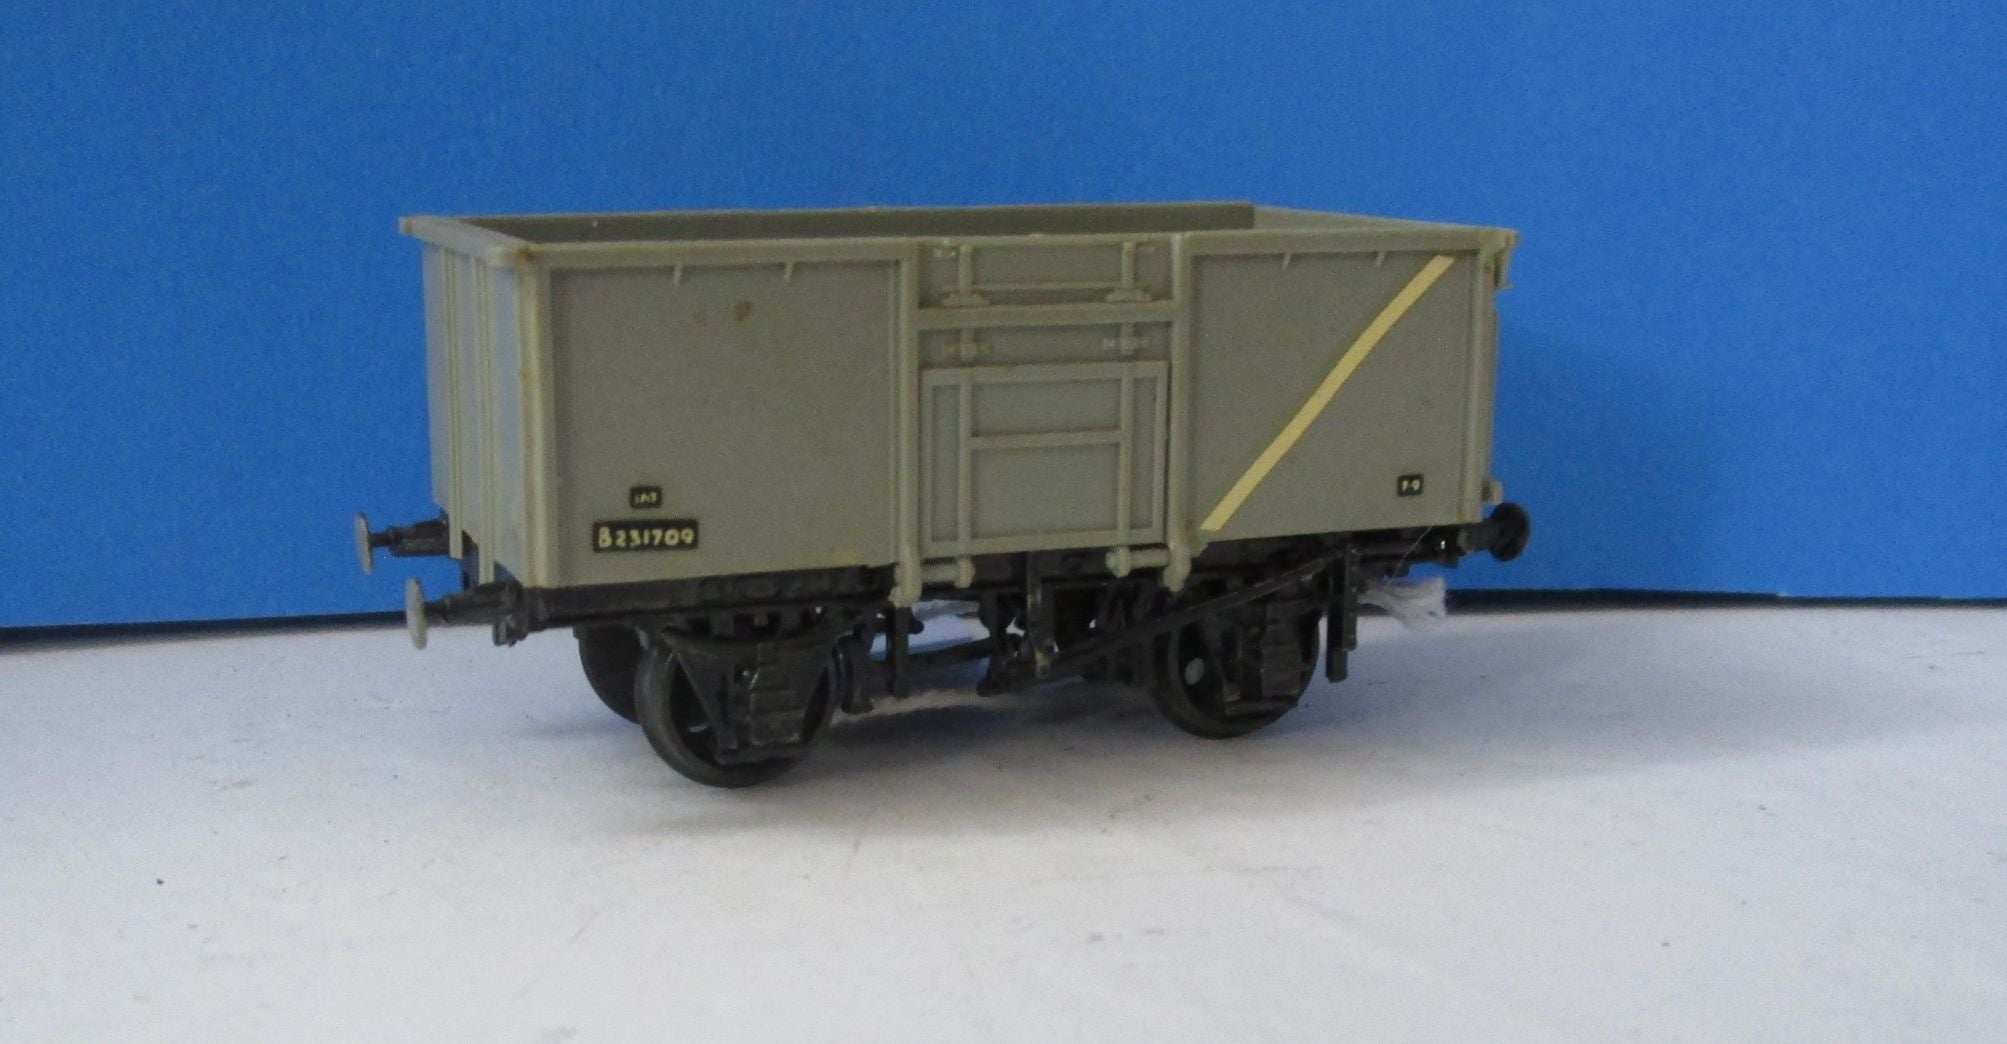 BMTW116 Kit Built 16 Ton Mineral Wagon - UNBOXED